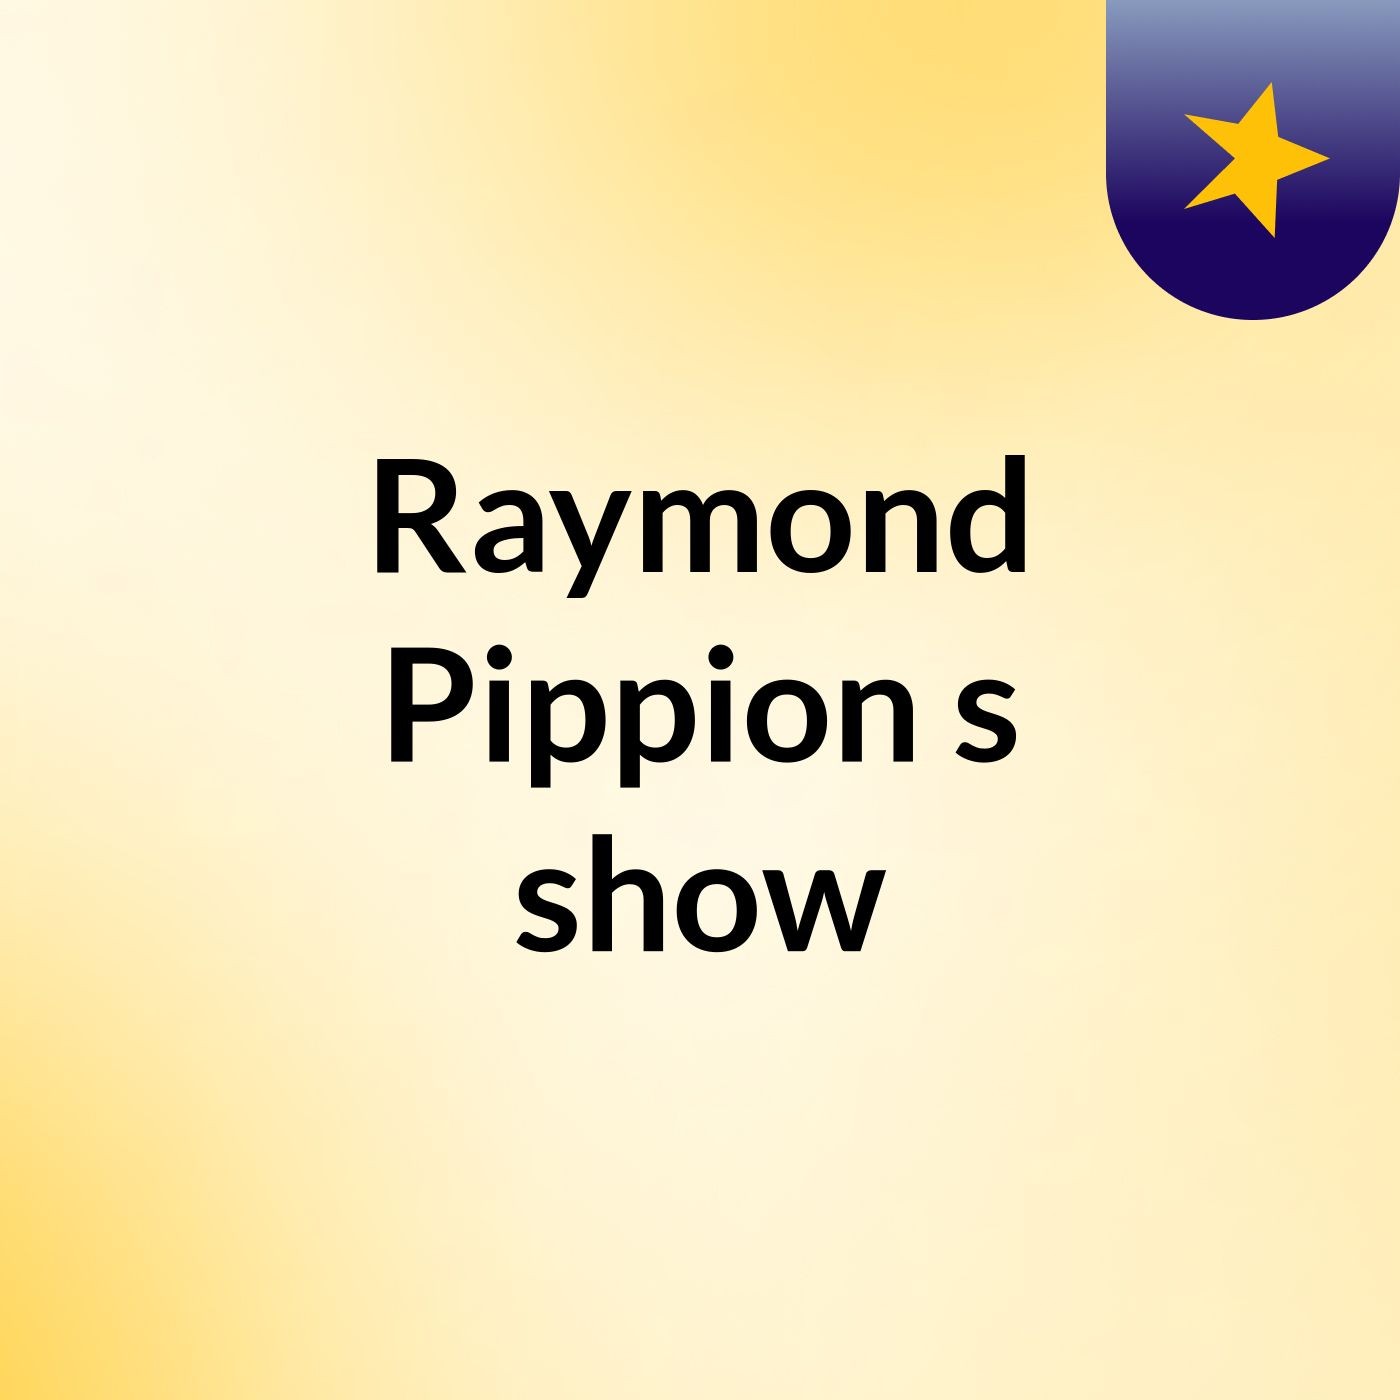 Episode 3 - Raymond Pippion's show